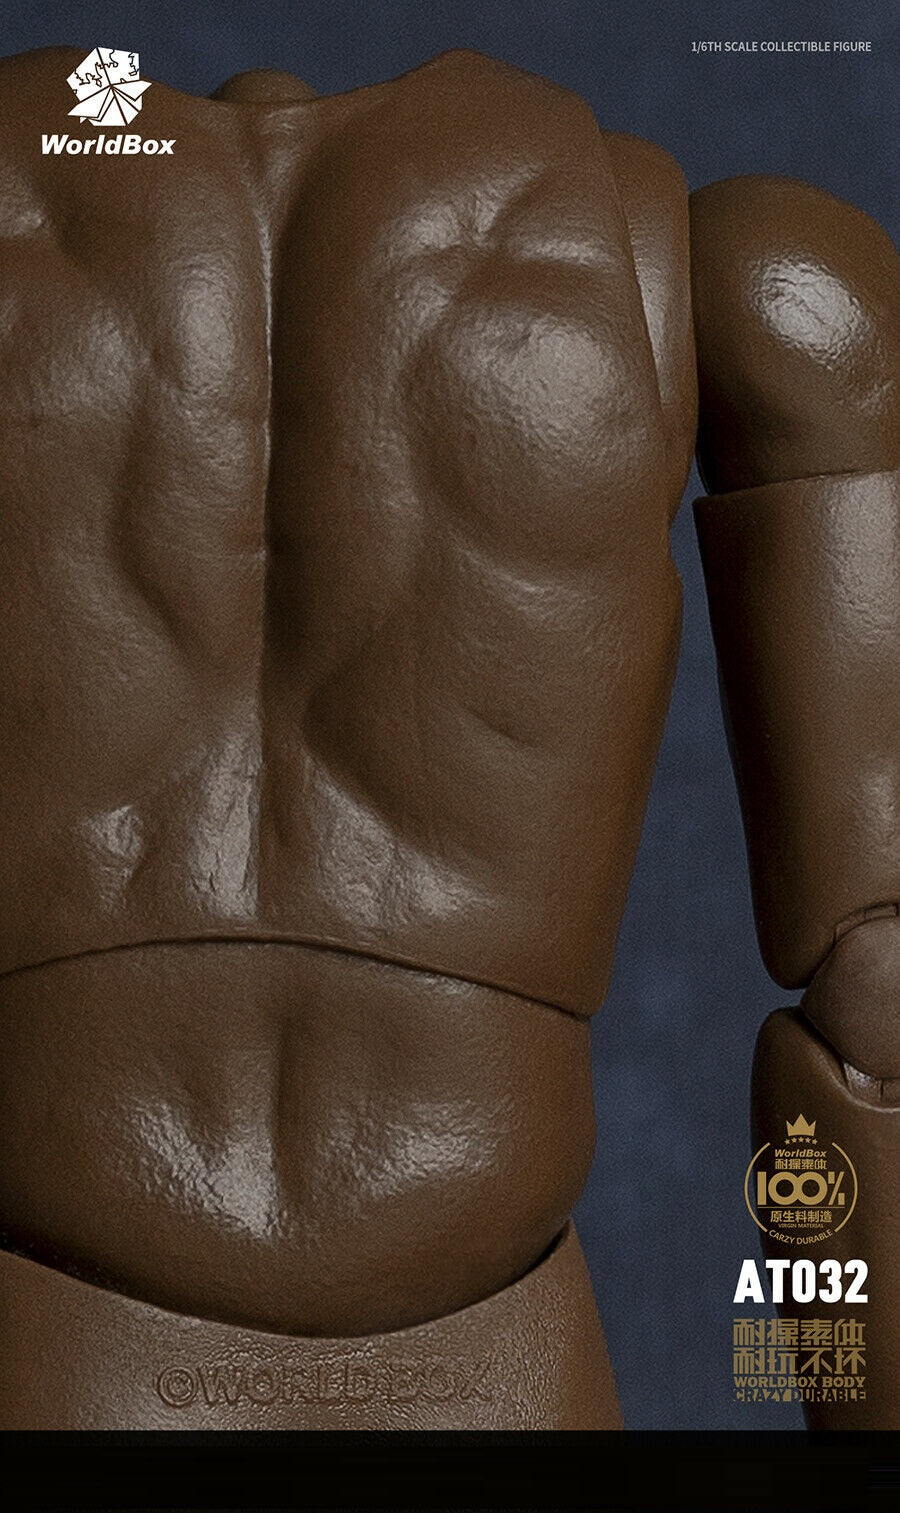 [PEDIDO] Cuerpo articulado masculino Universal (Black version) marca Worldbox AT032 escala 1/6